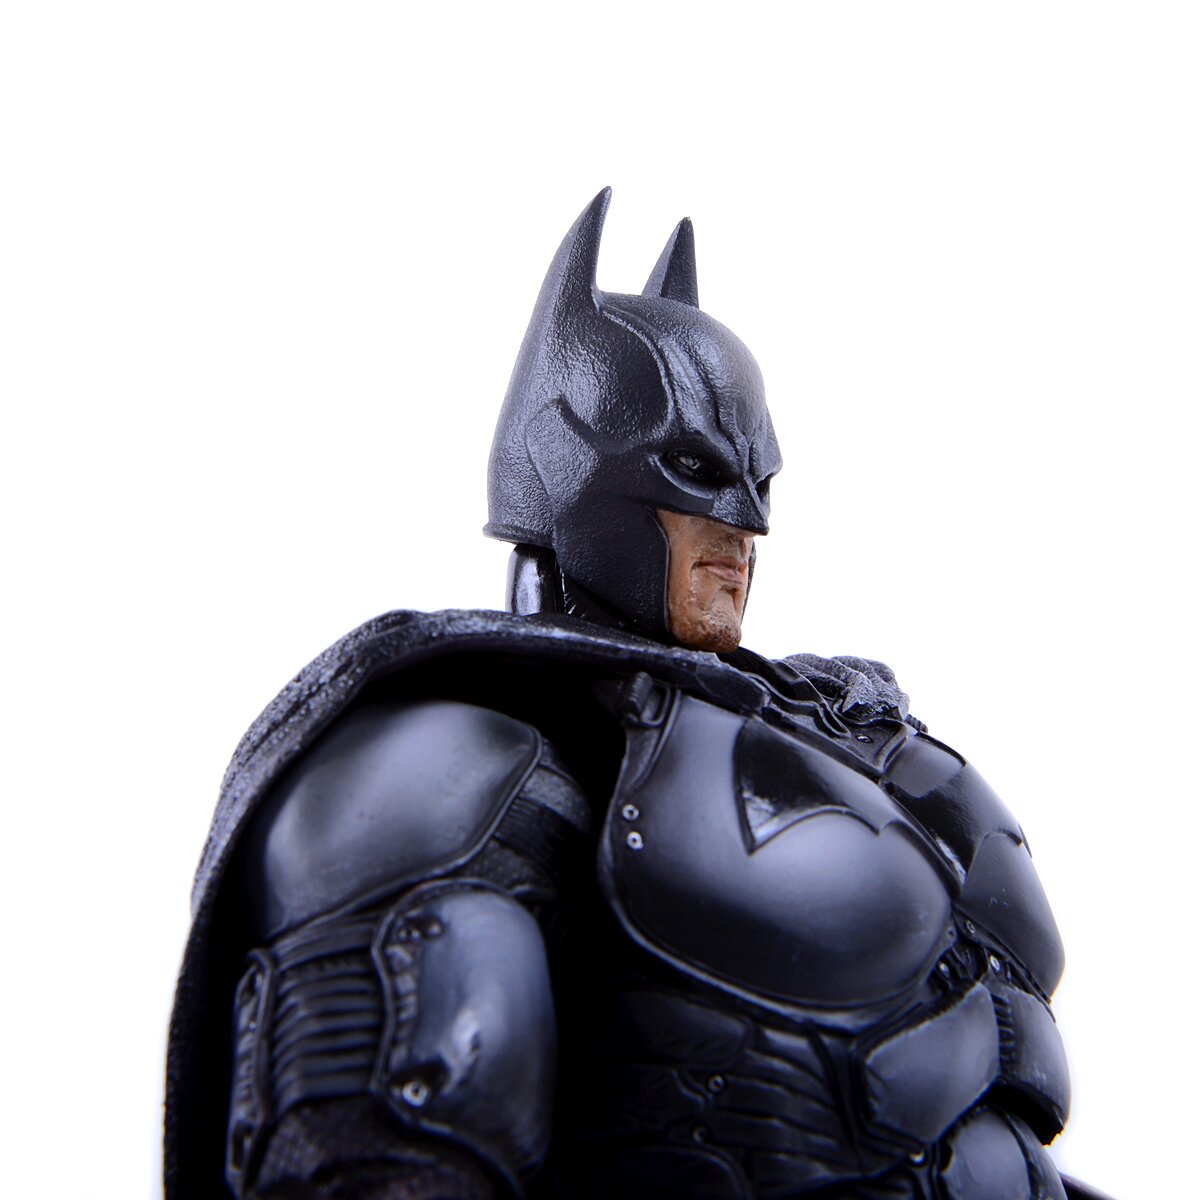 Batman Arkham Origins 8 Inch Action Figure Play Arts Kai Series - Batm